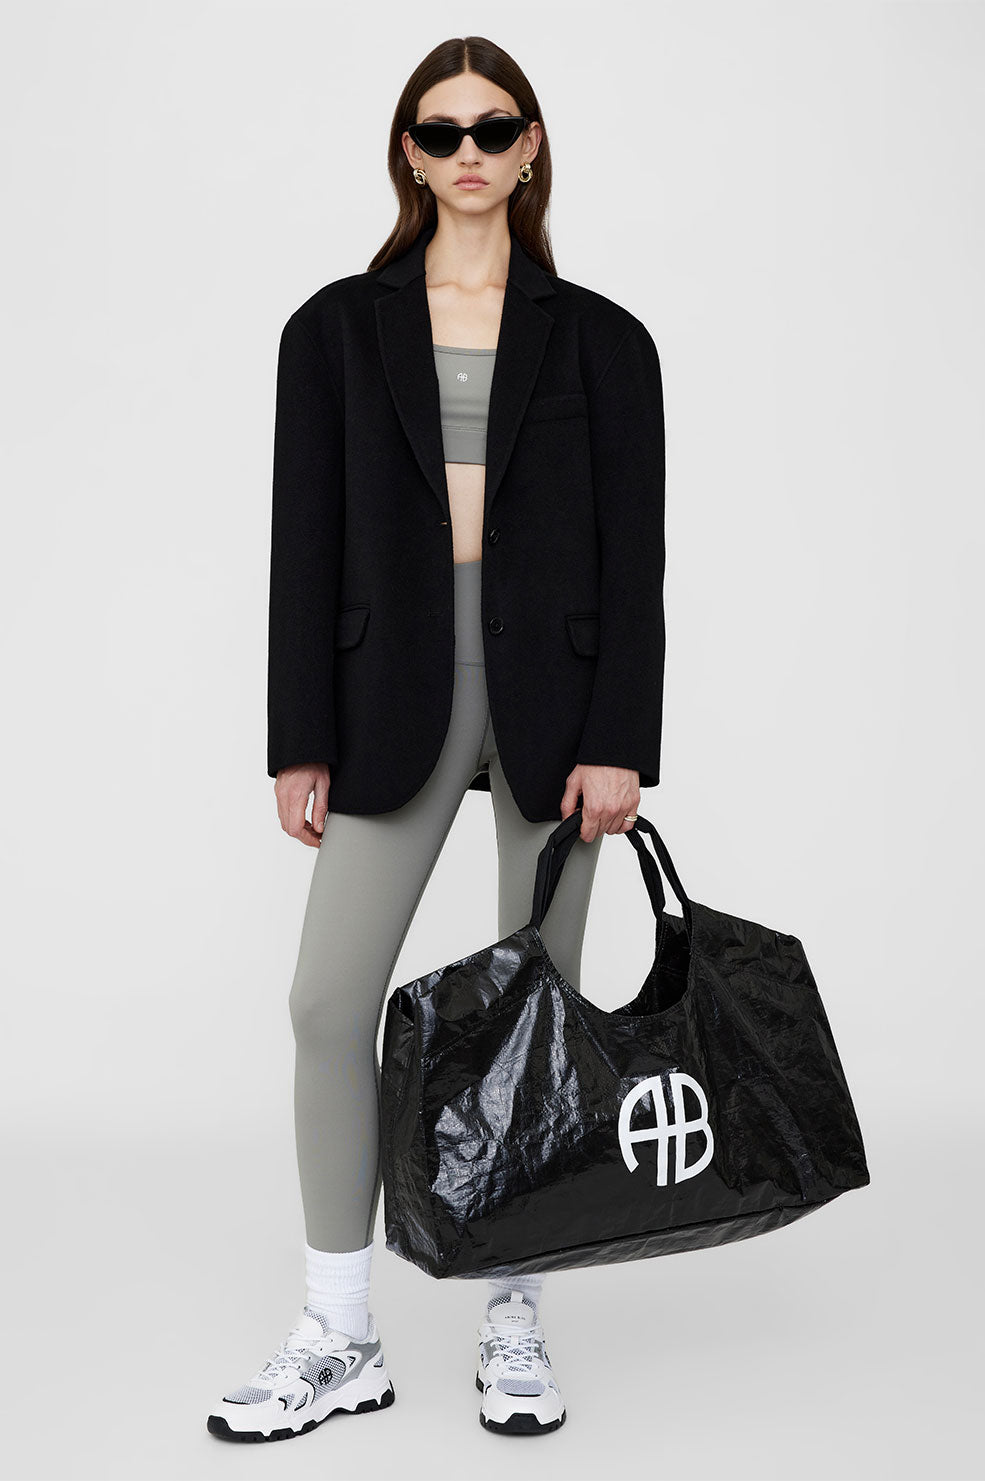 Anine Bing Bianca Monogram Top Handle Bag in Black